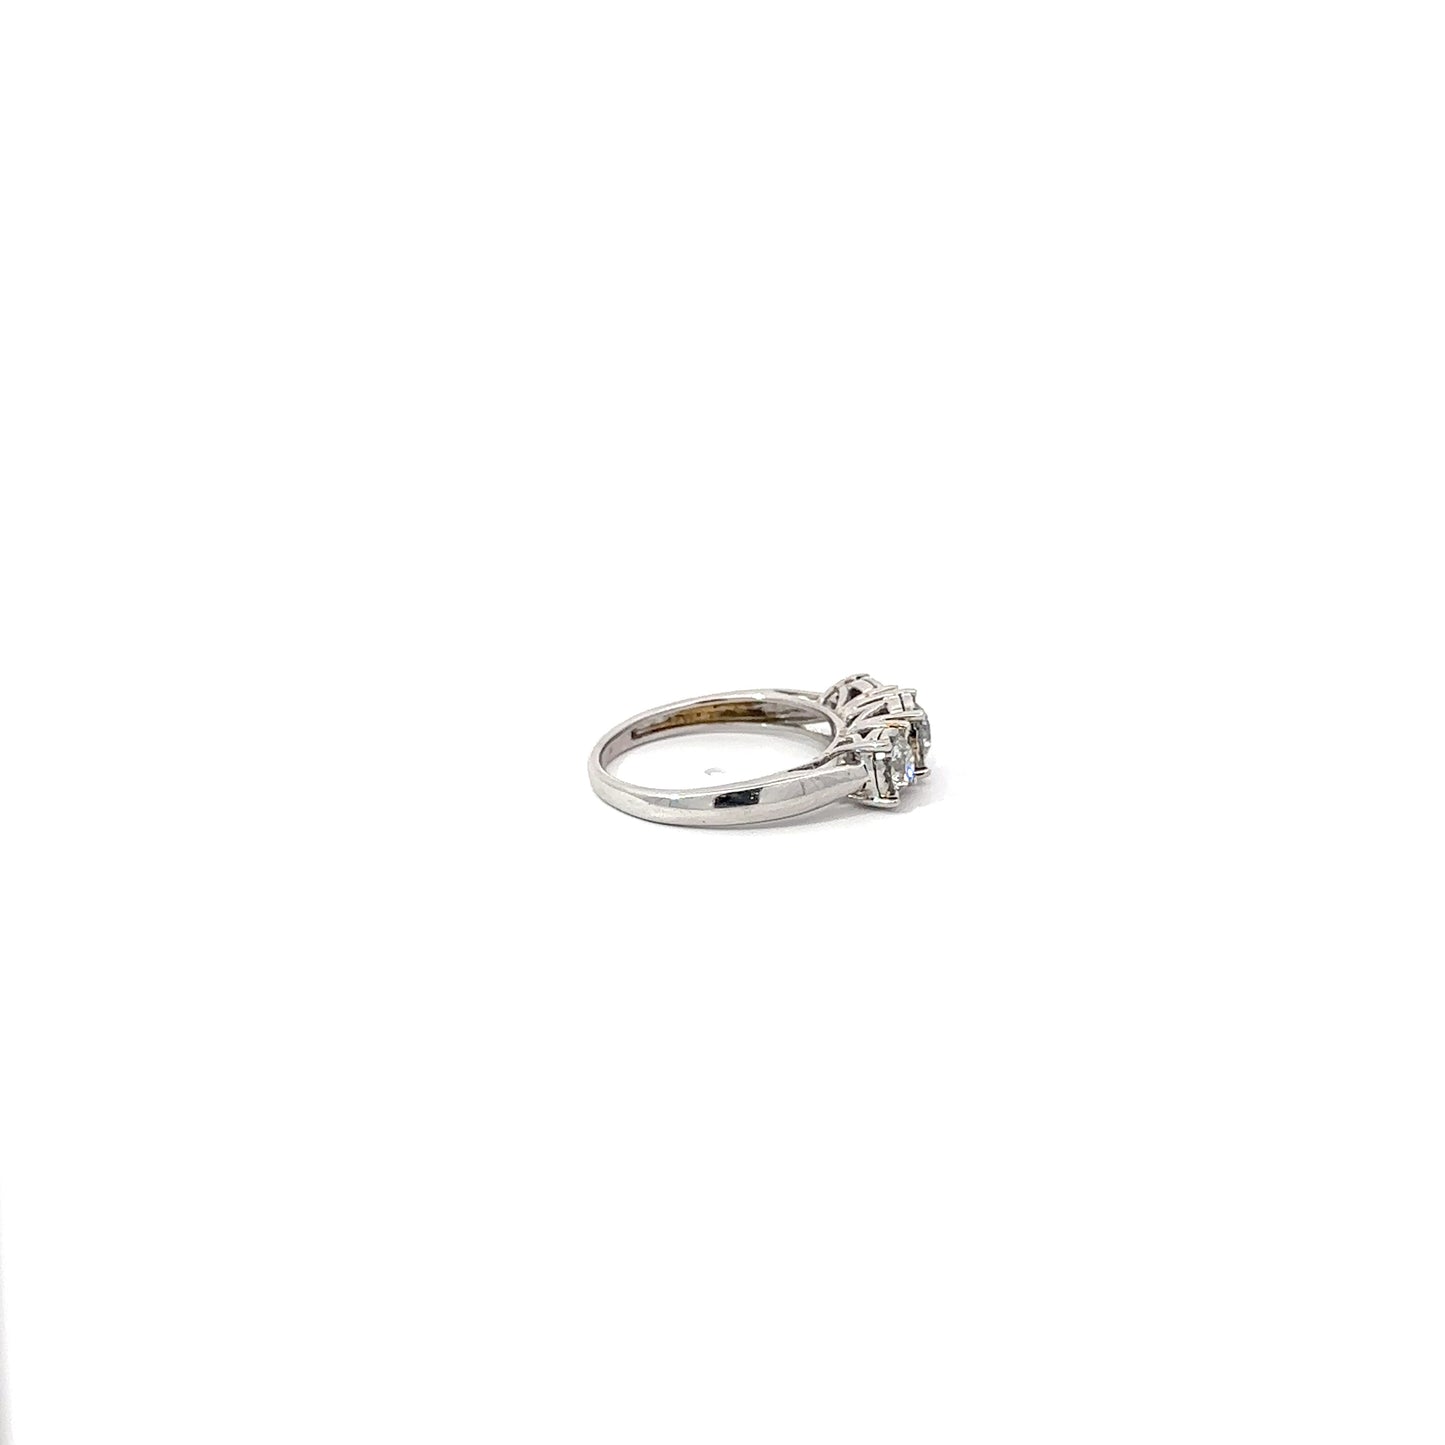 10K White Gold 3 Stone Ring